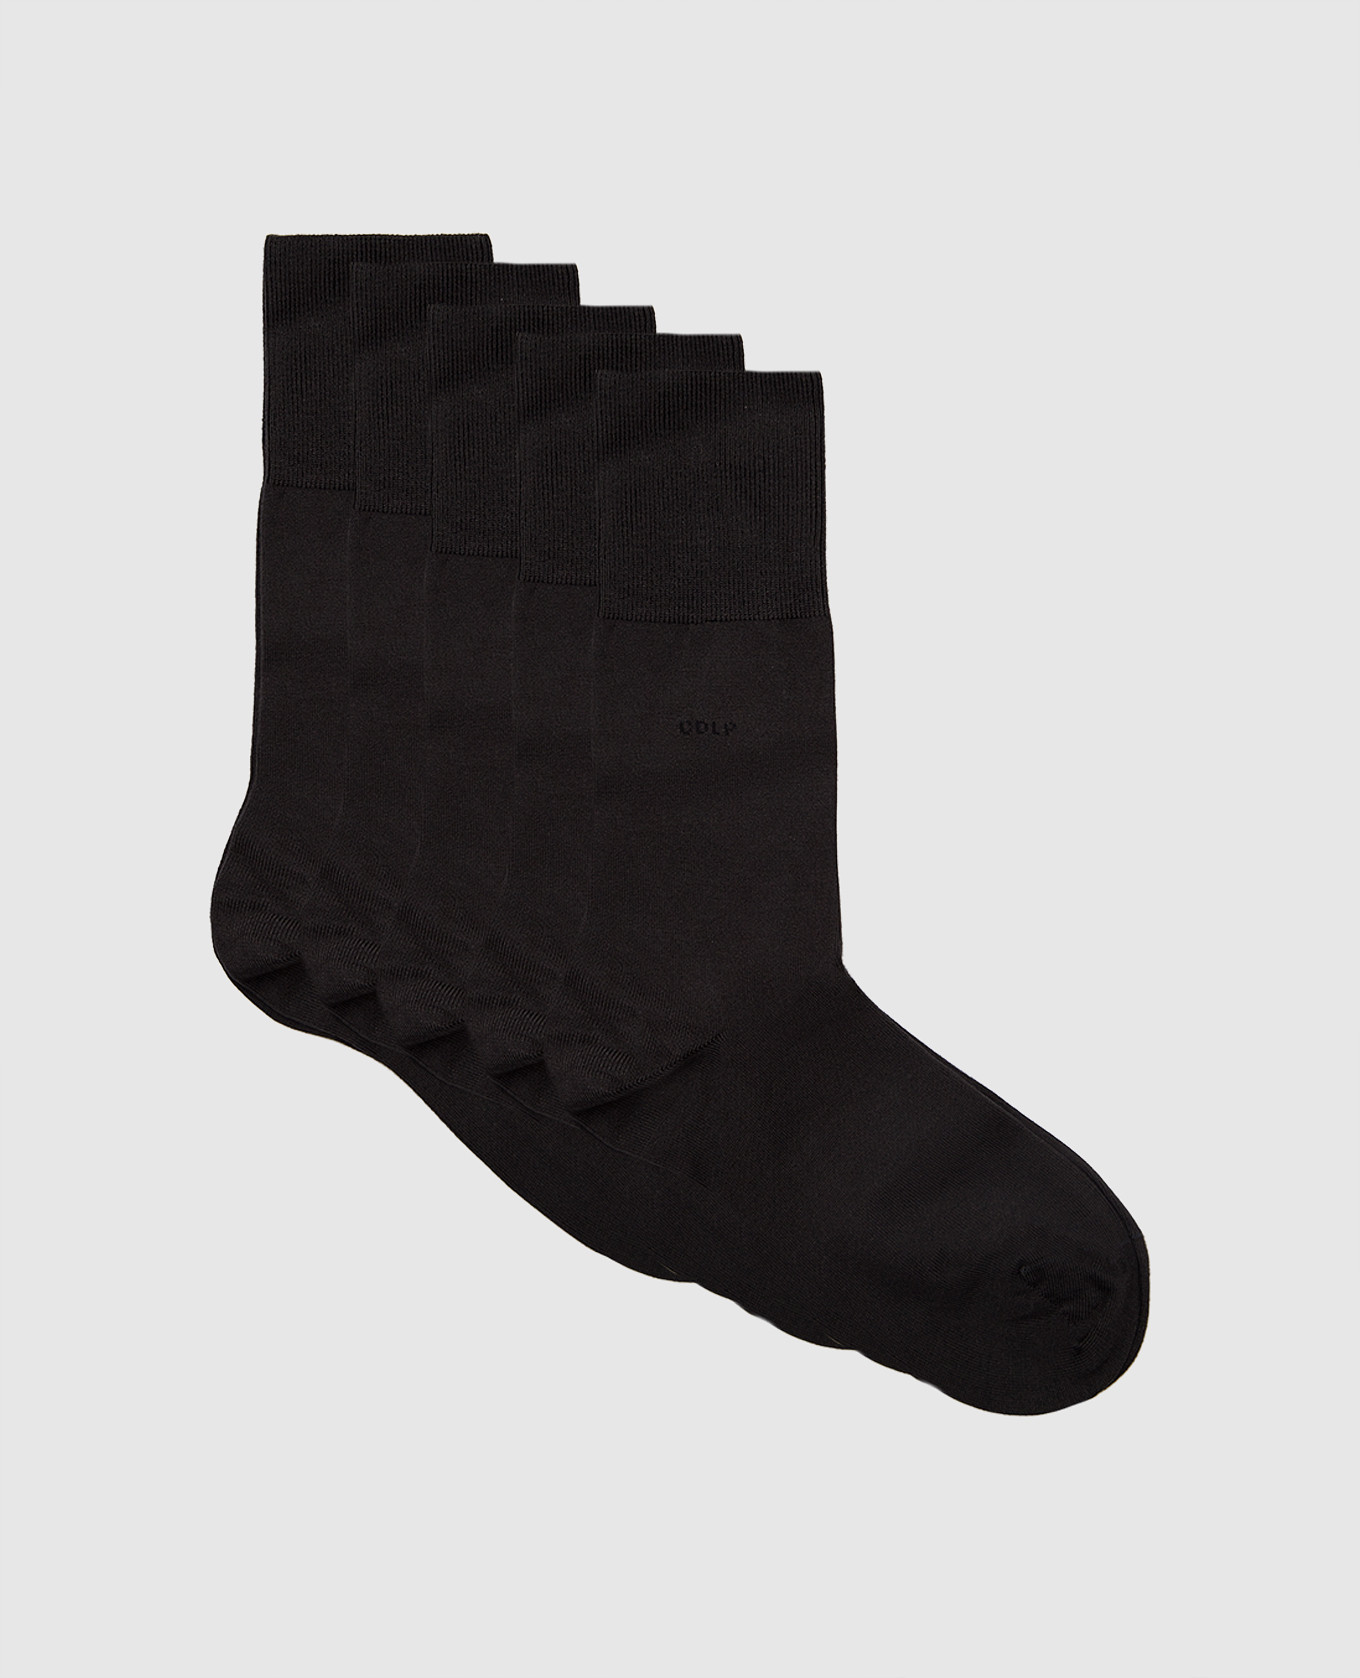 A set of khaki socks with a logo pattern